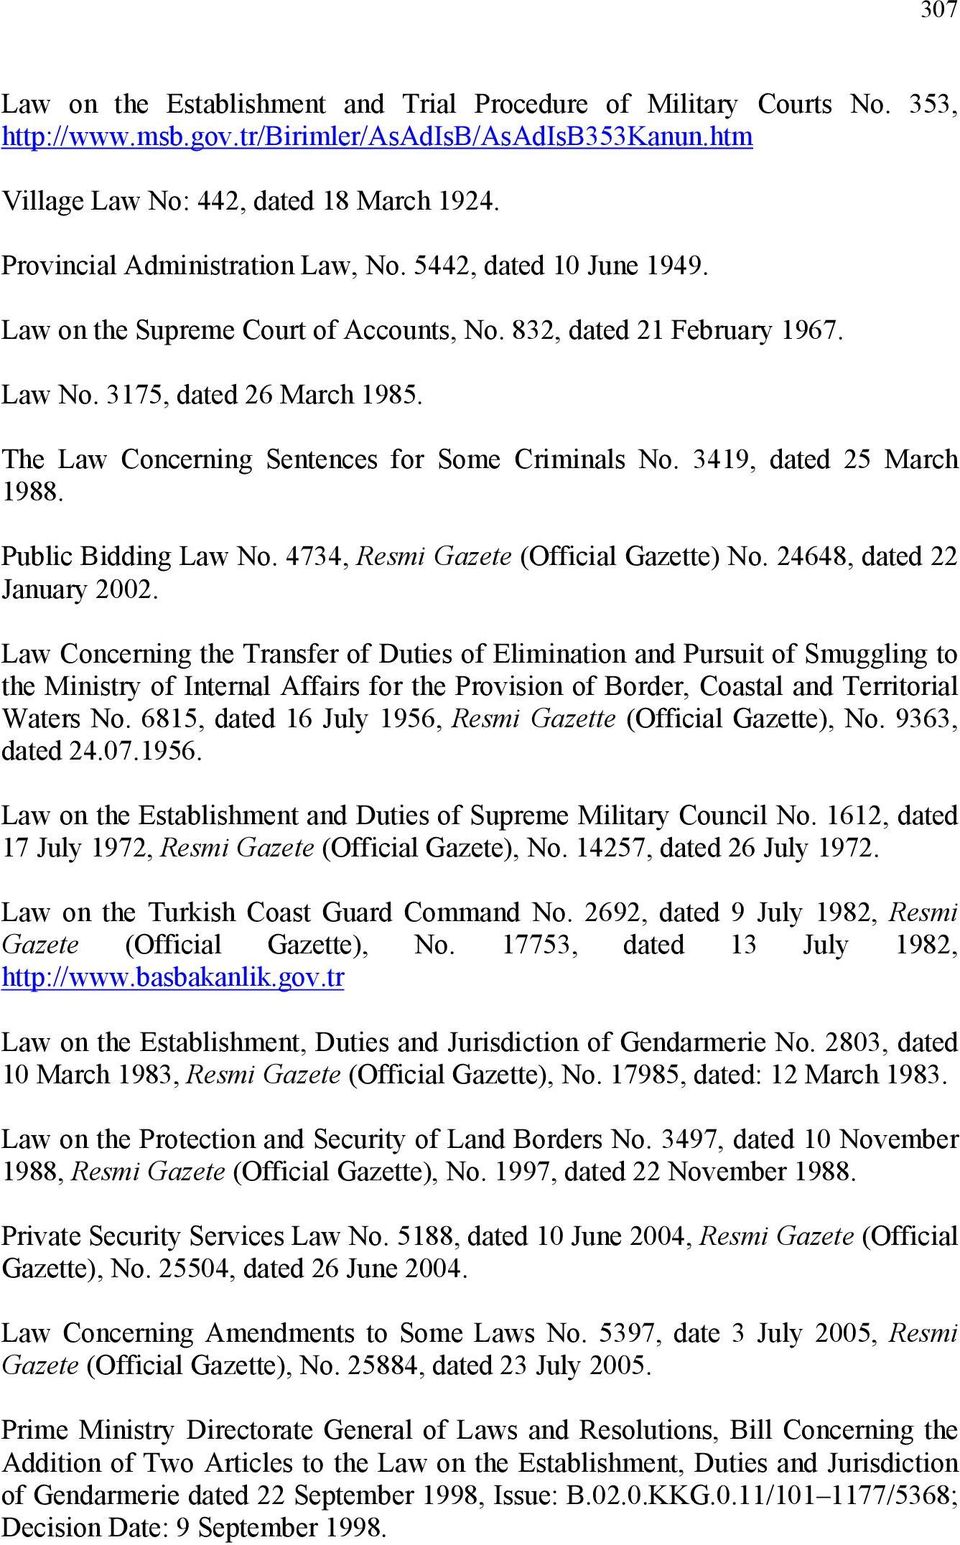 The Law Concerning Sentences for Some Criminals No. 3419, dated 25 March 1988. Public Bidding Law No. 4734, Resmi Gazete (Official Gazette) No. 24648, dated 22 January 2002.